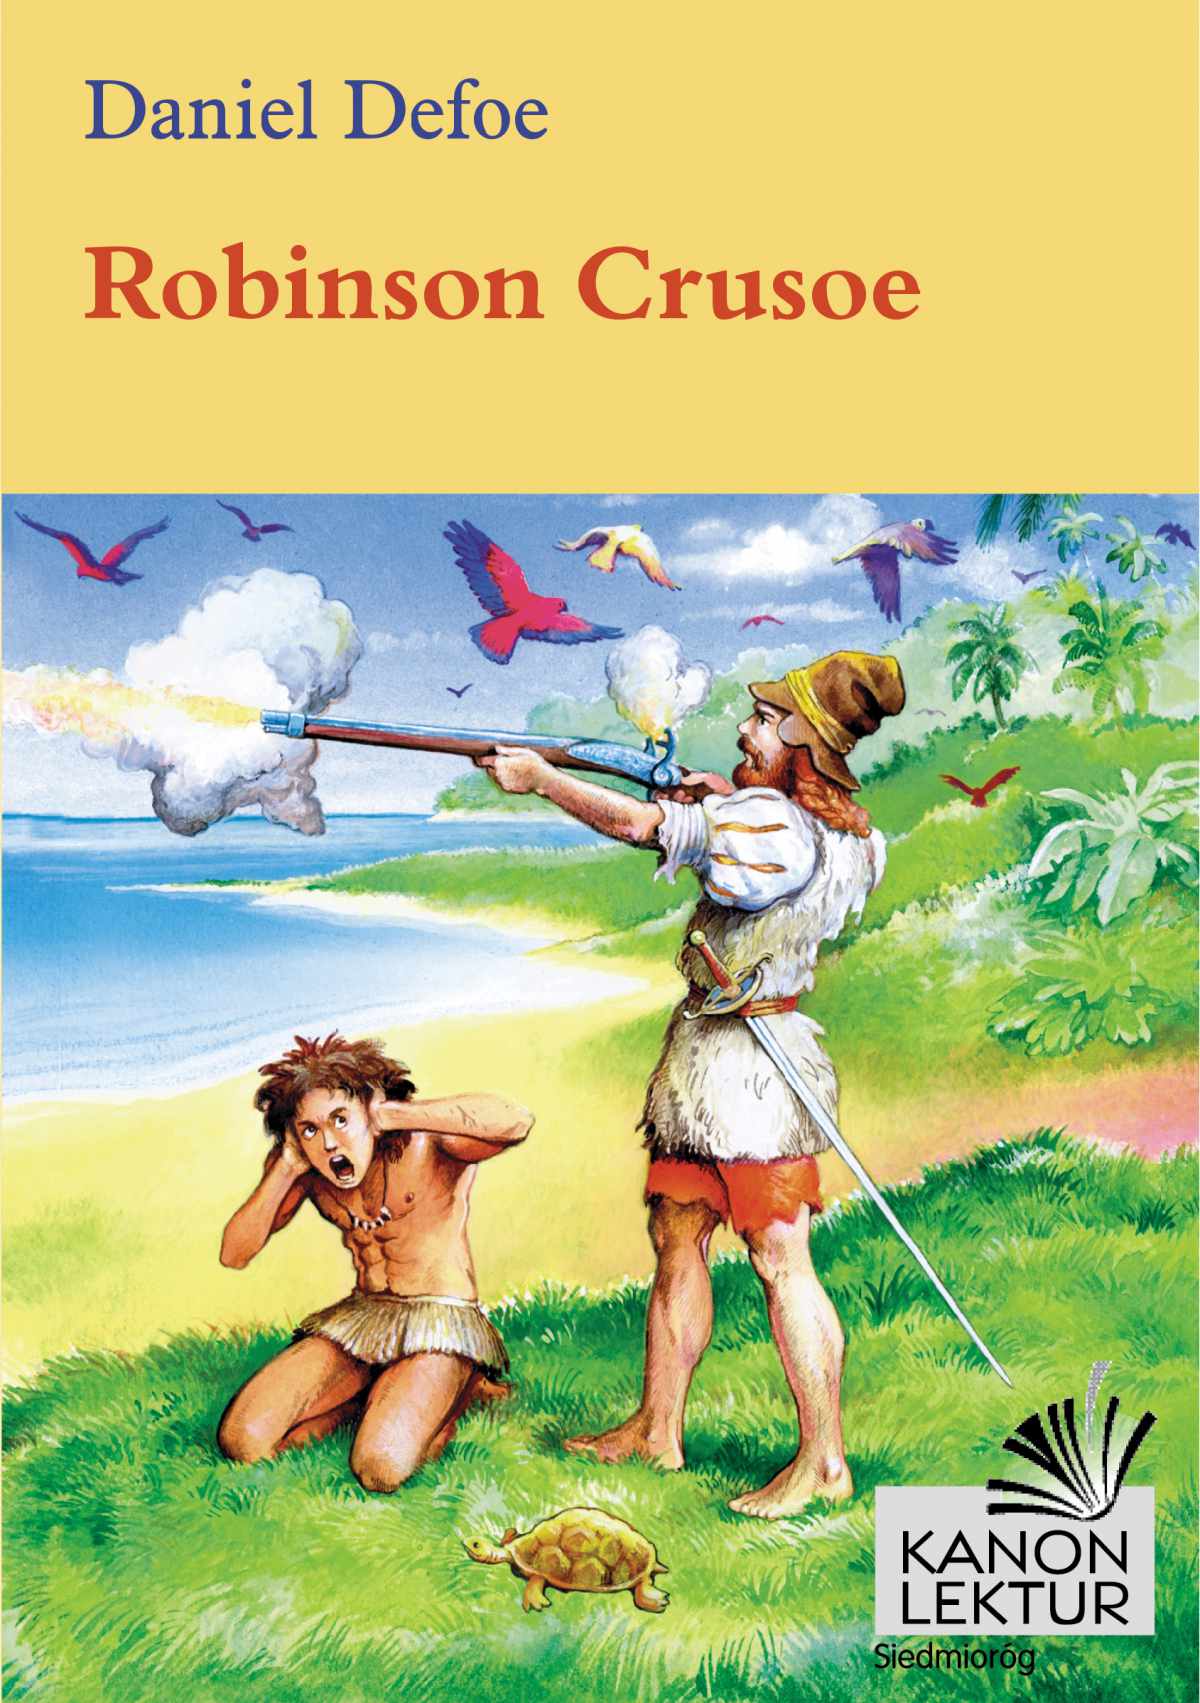 Робинзон крузо fb2. Daniel Defoe Робинзон. Defoe Daniel "Robinson Crusoe". Дэниель Дэфо Робинзон Крузо книга. Даниель ДЕФОРОБИНЗОН Крузо.